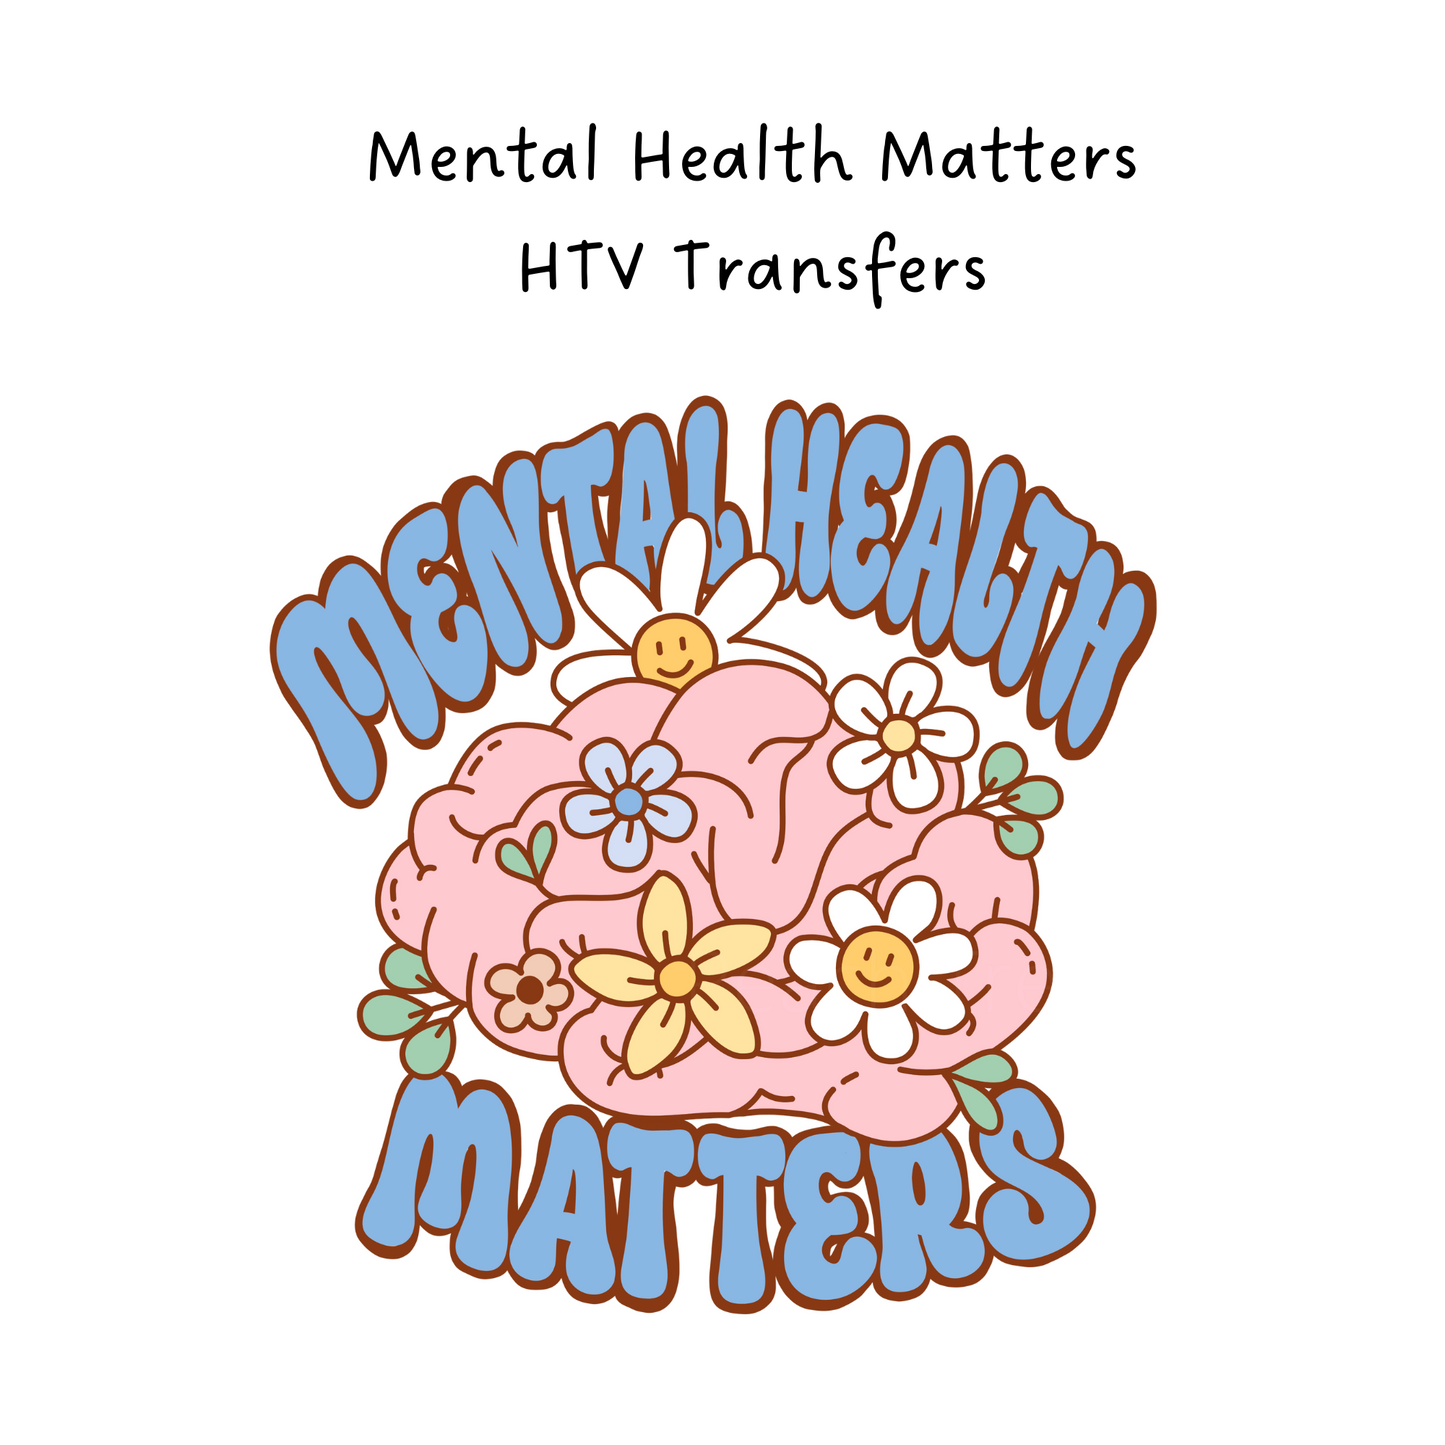 Mental Health Matters HTV Transfer